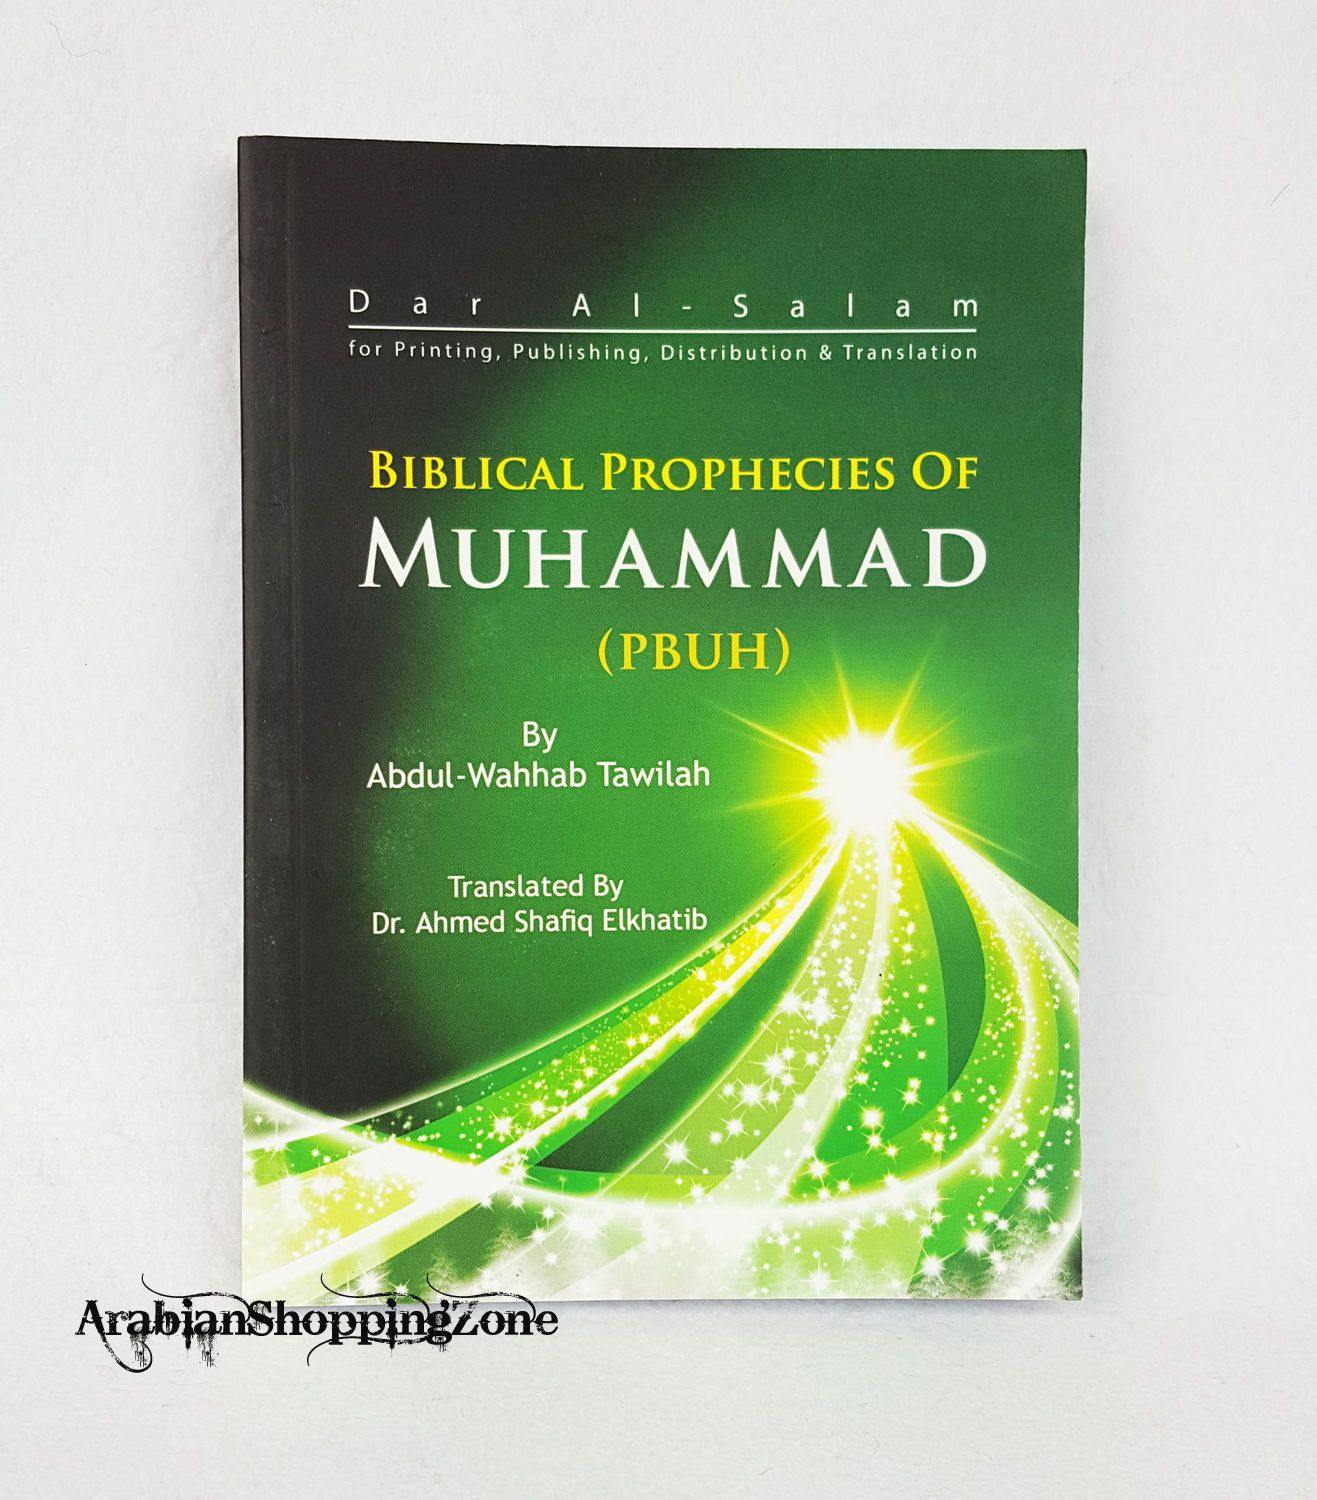 Biblical Prophecies of Mohammad (English)  from Dar-Alsalam - Arabian Shopping Zone